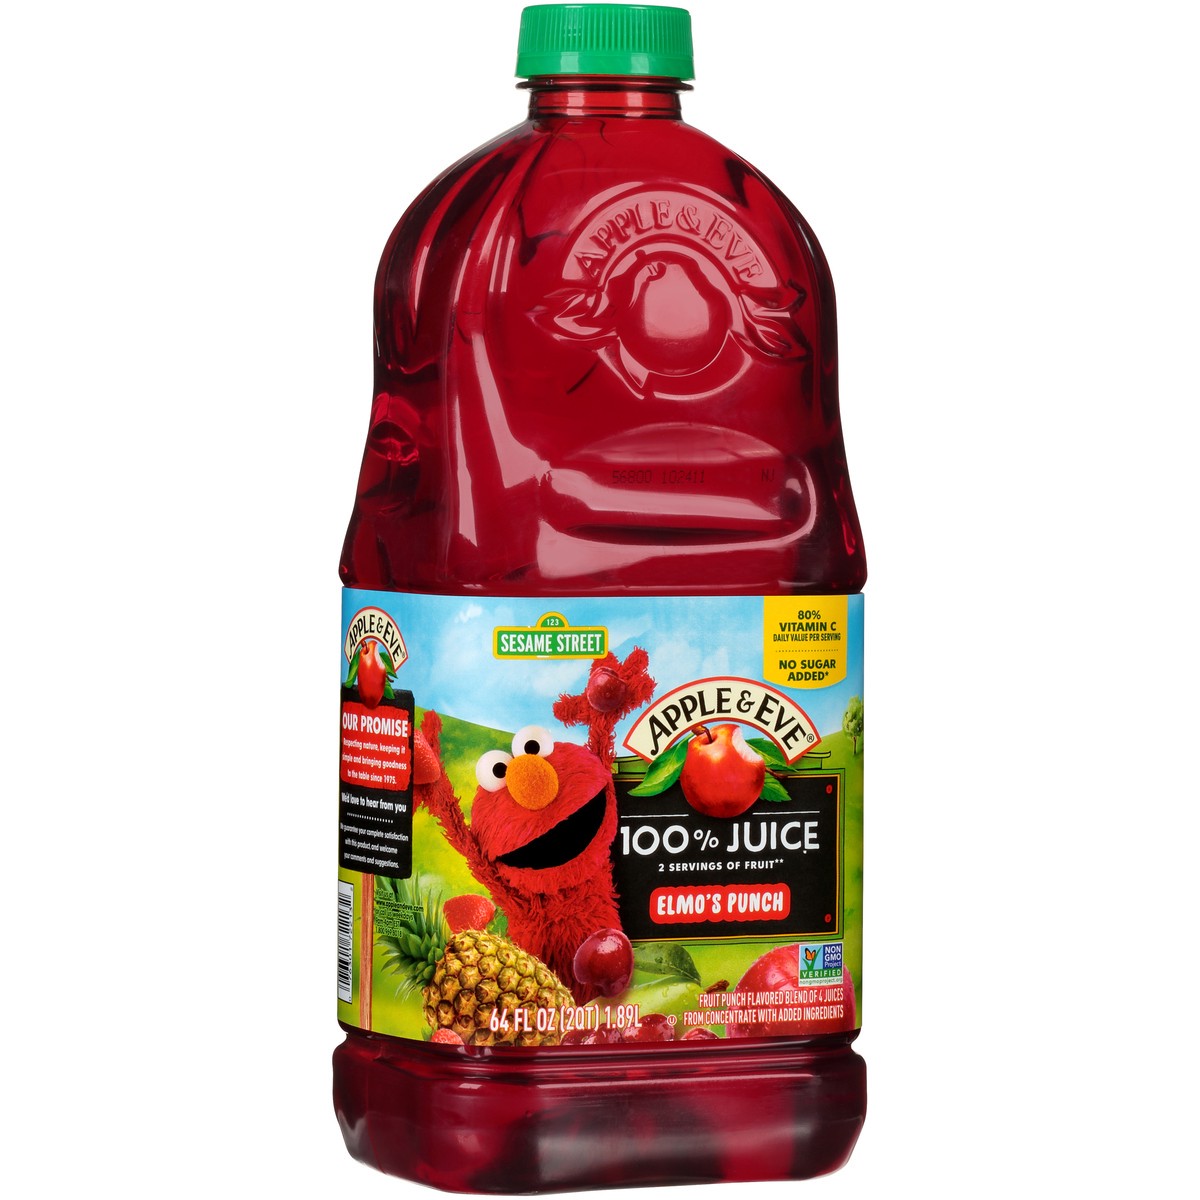 slide 11 of 11, Apple & Eve Sesame Street Elmo's Punch 100% Juice 64 fl. oz. Bottle, 64 fl oz